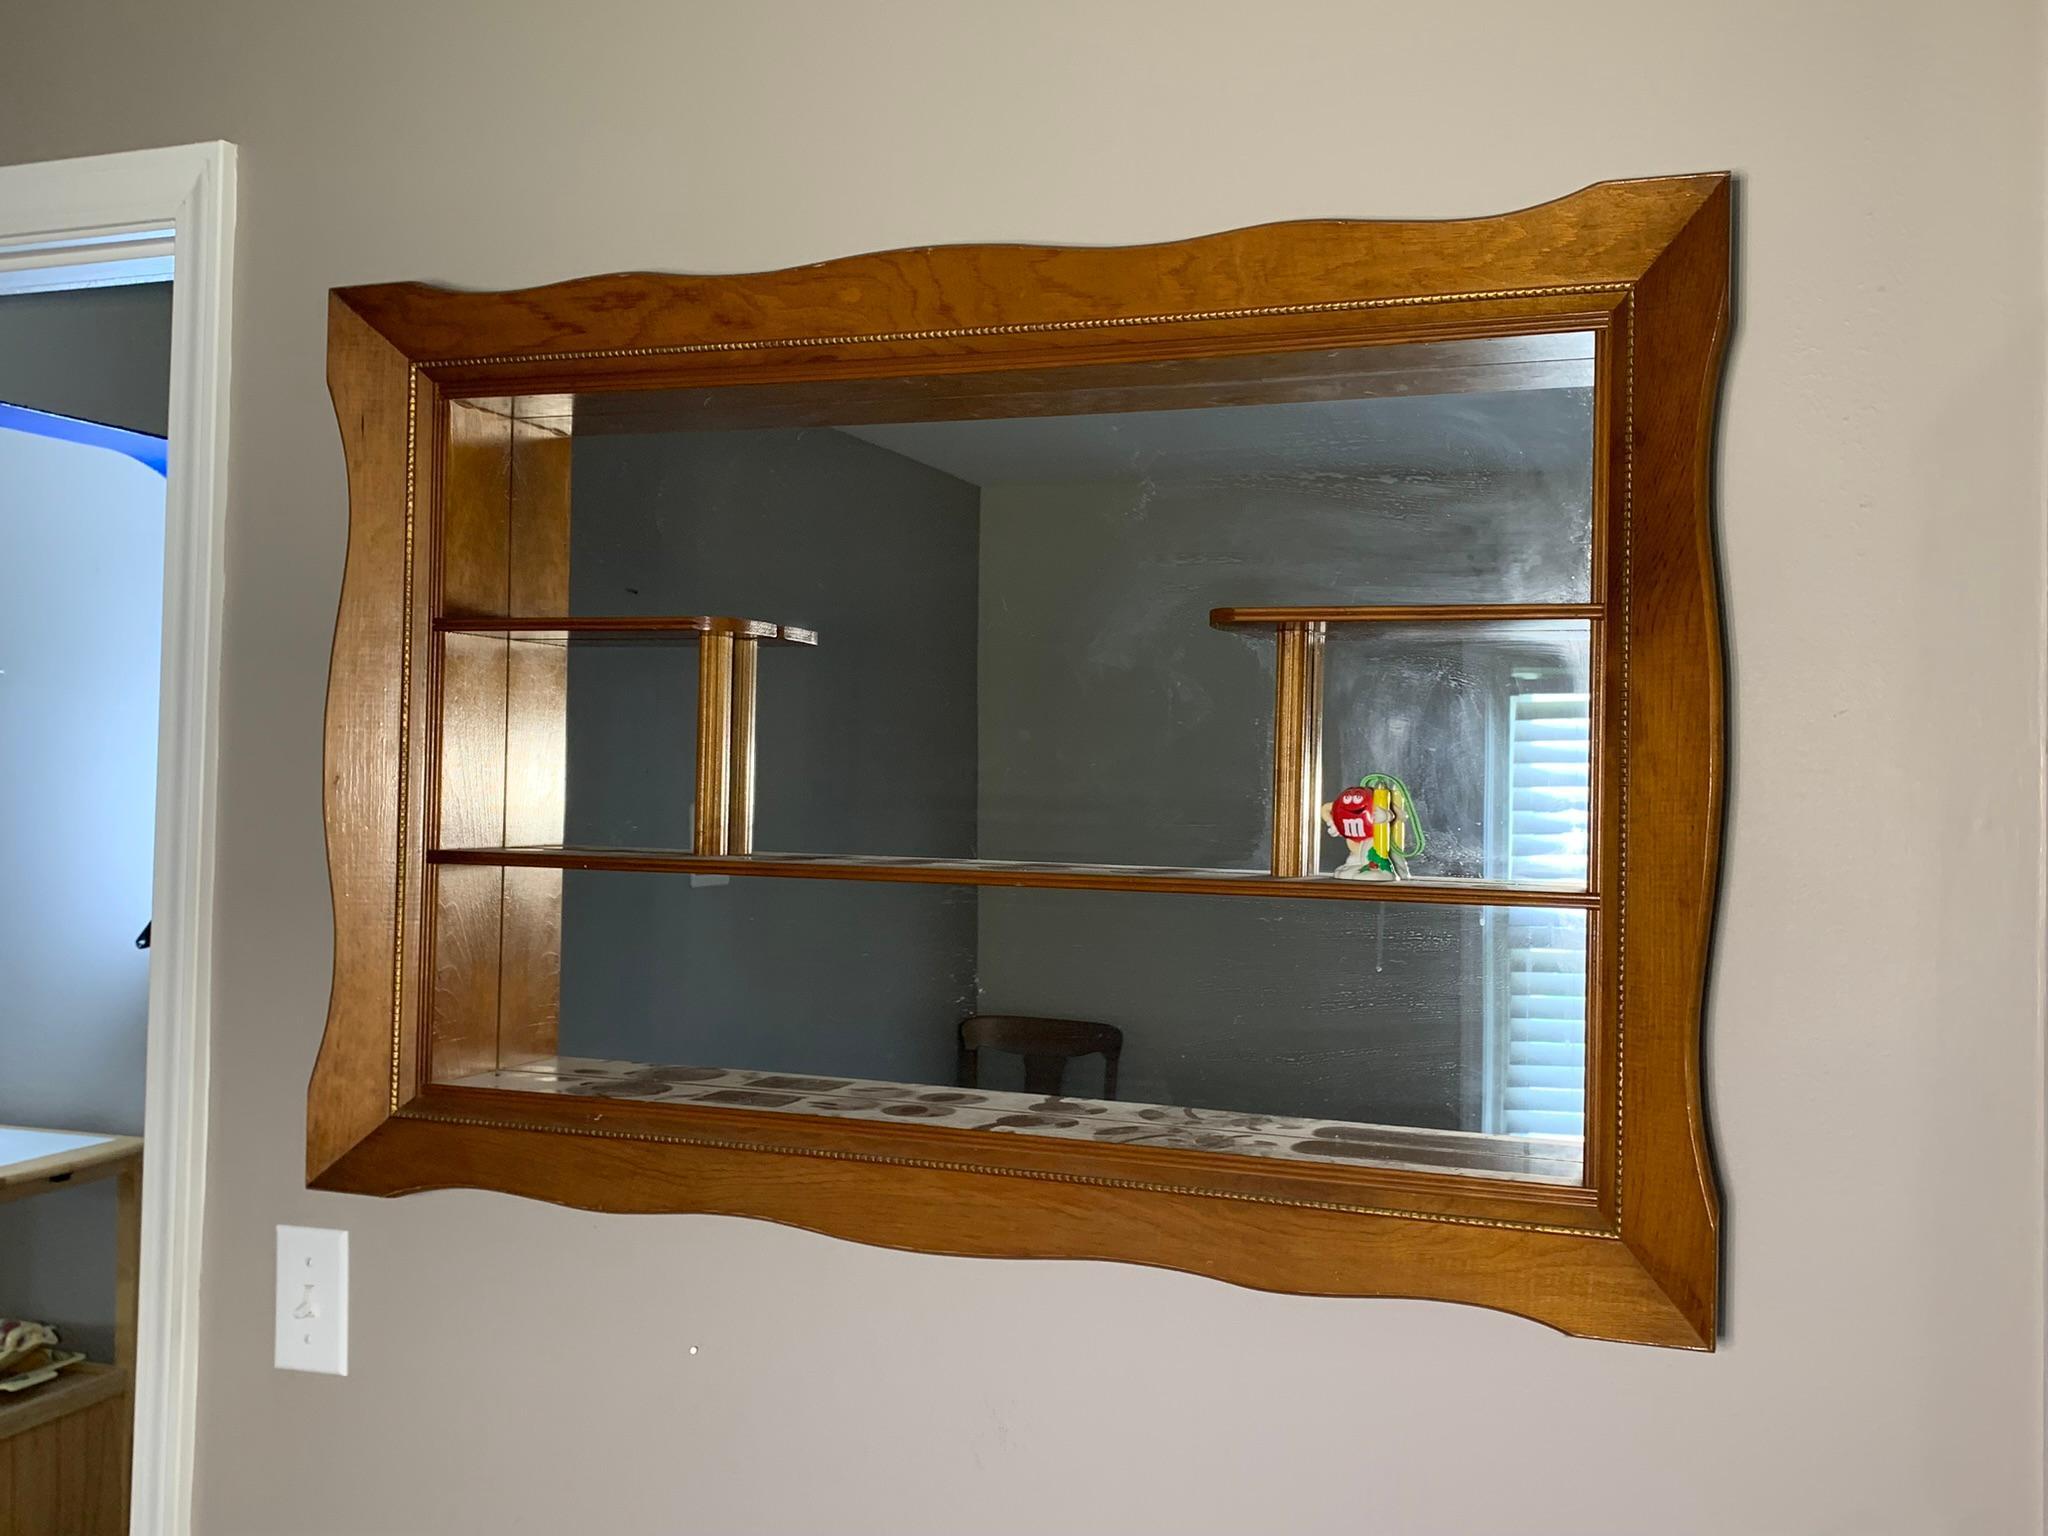 Bassett Furniture Dresser with Mirrors, Dog Bank, Soft Goods, Blankets, Mirror Display Shelf & More